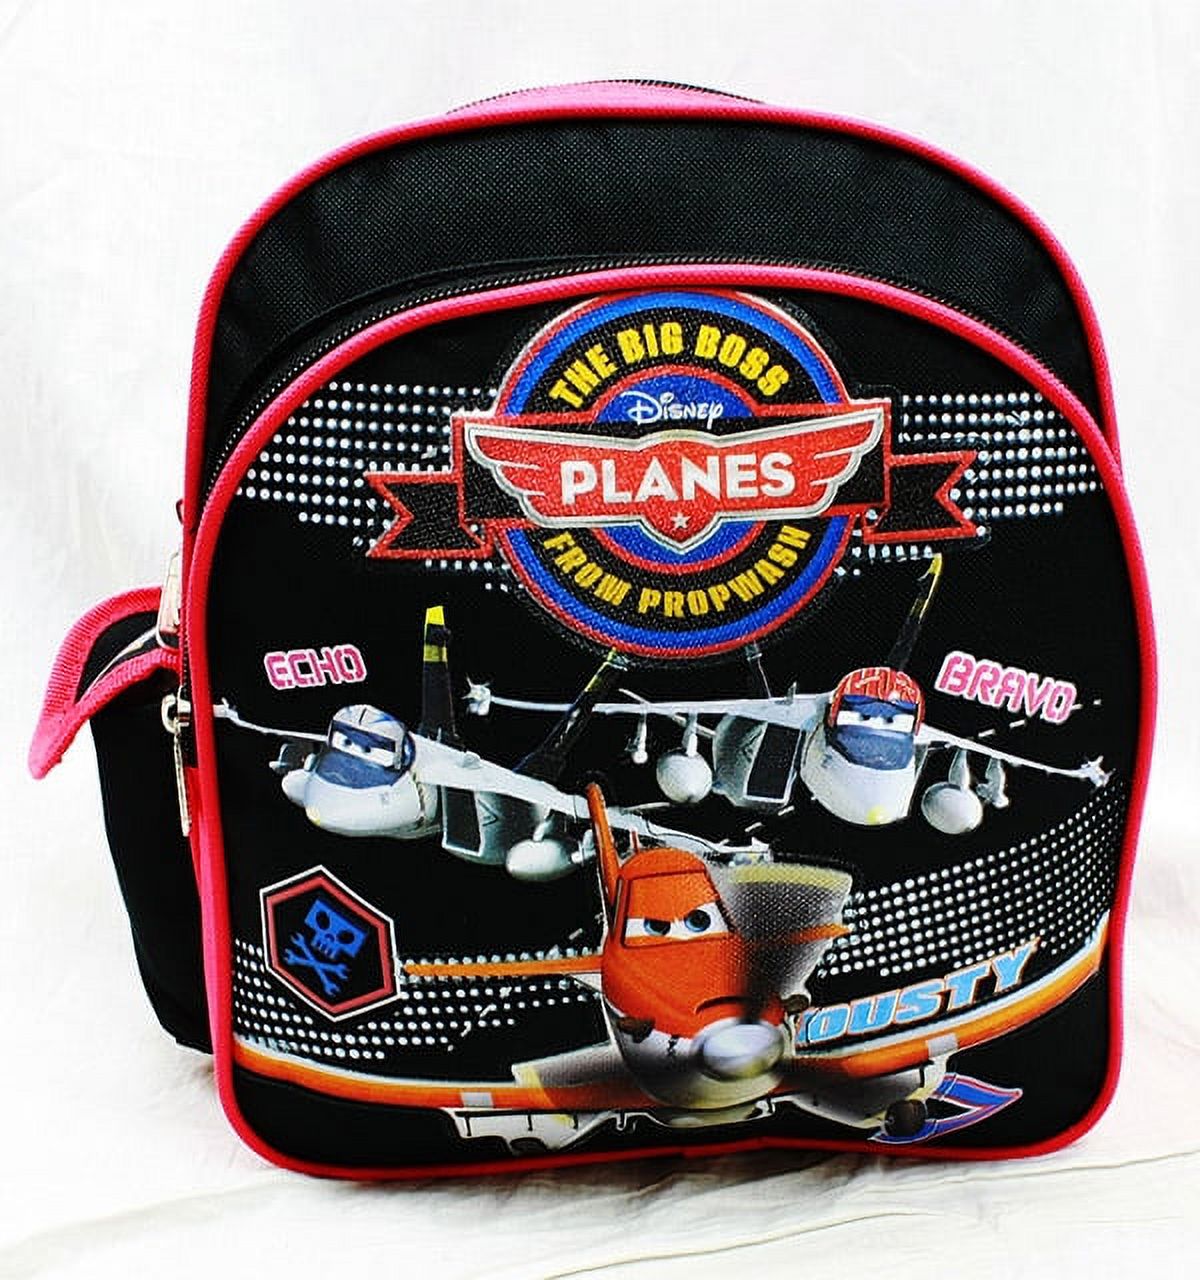 Mini Backpack - Disney - Planes - Dusty Echo+Bravo School Bag New a03201 - image 1 of 3